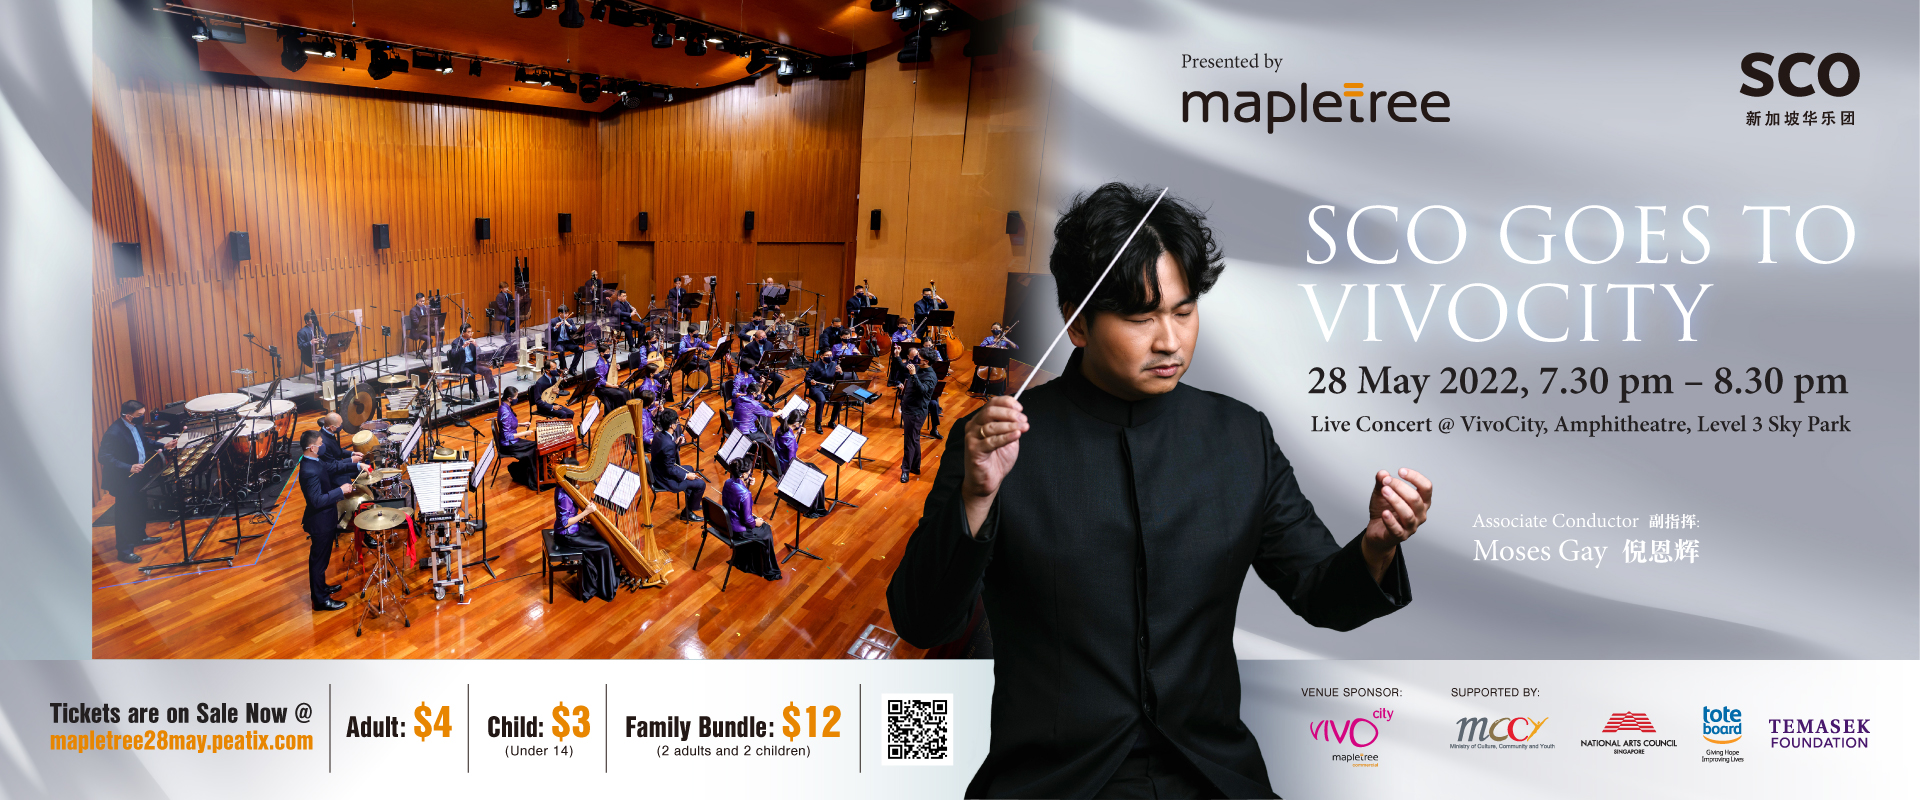 SCO_Mapletree_Concert_1920x800_3 新加坡华乐团绿荫乐鸣系列